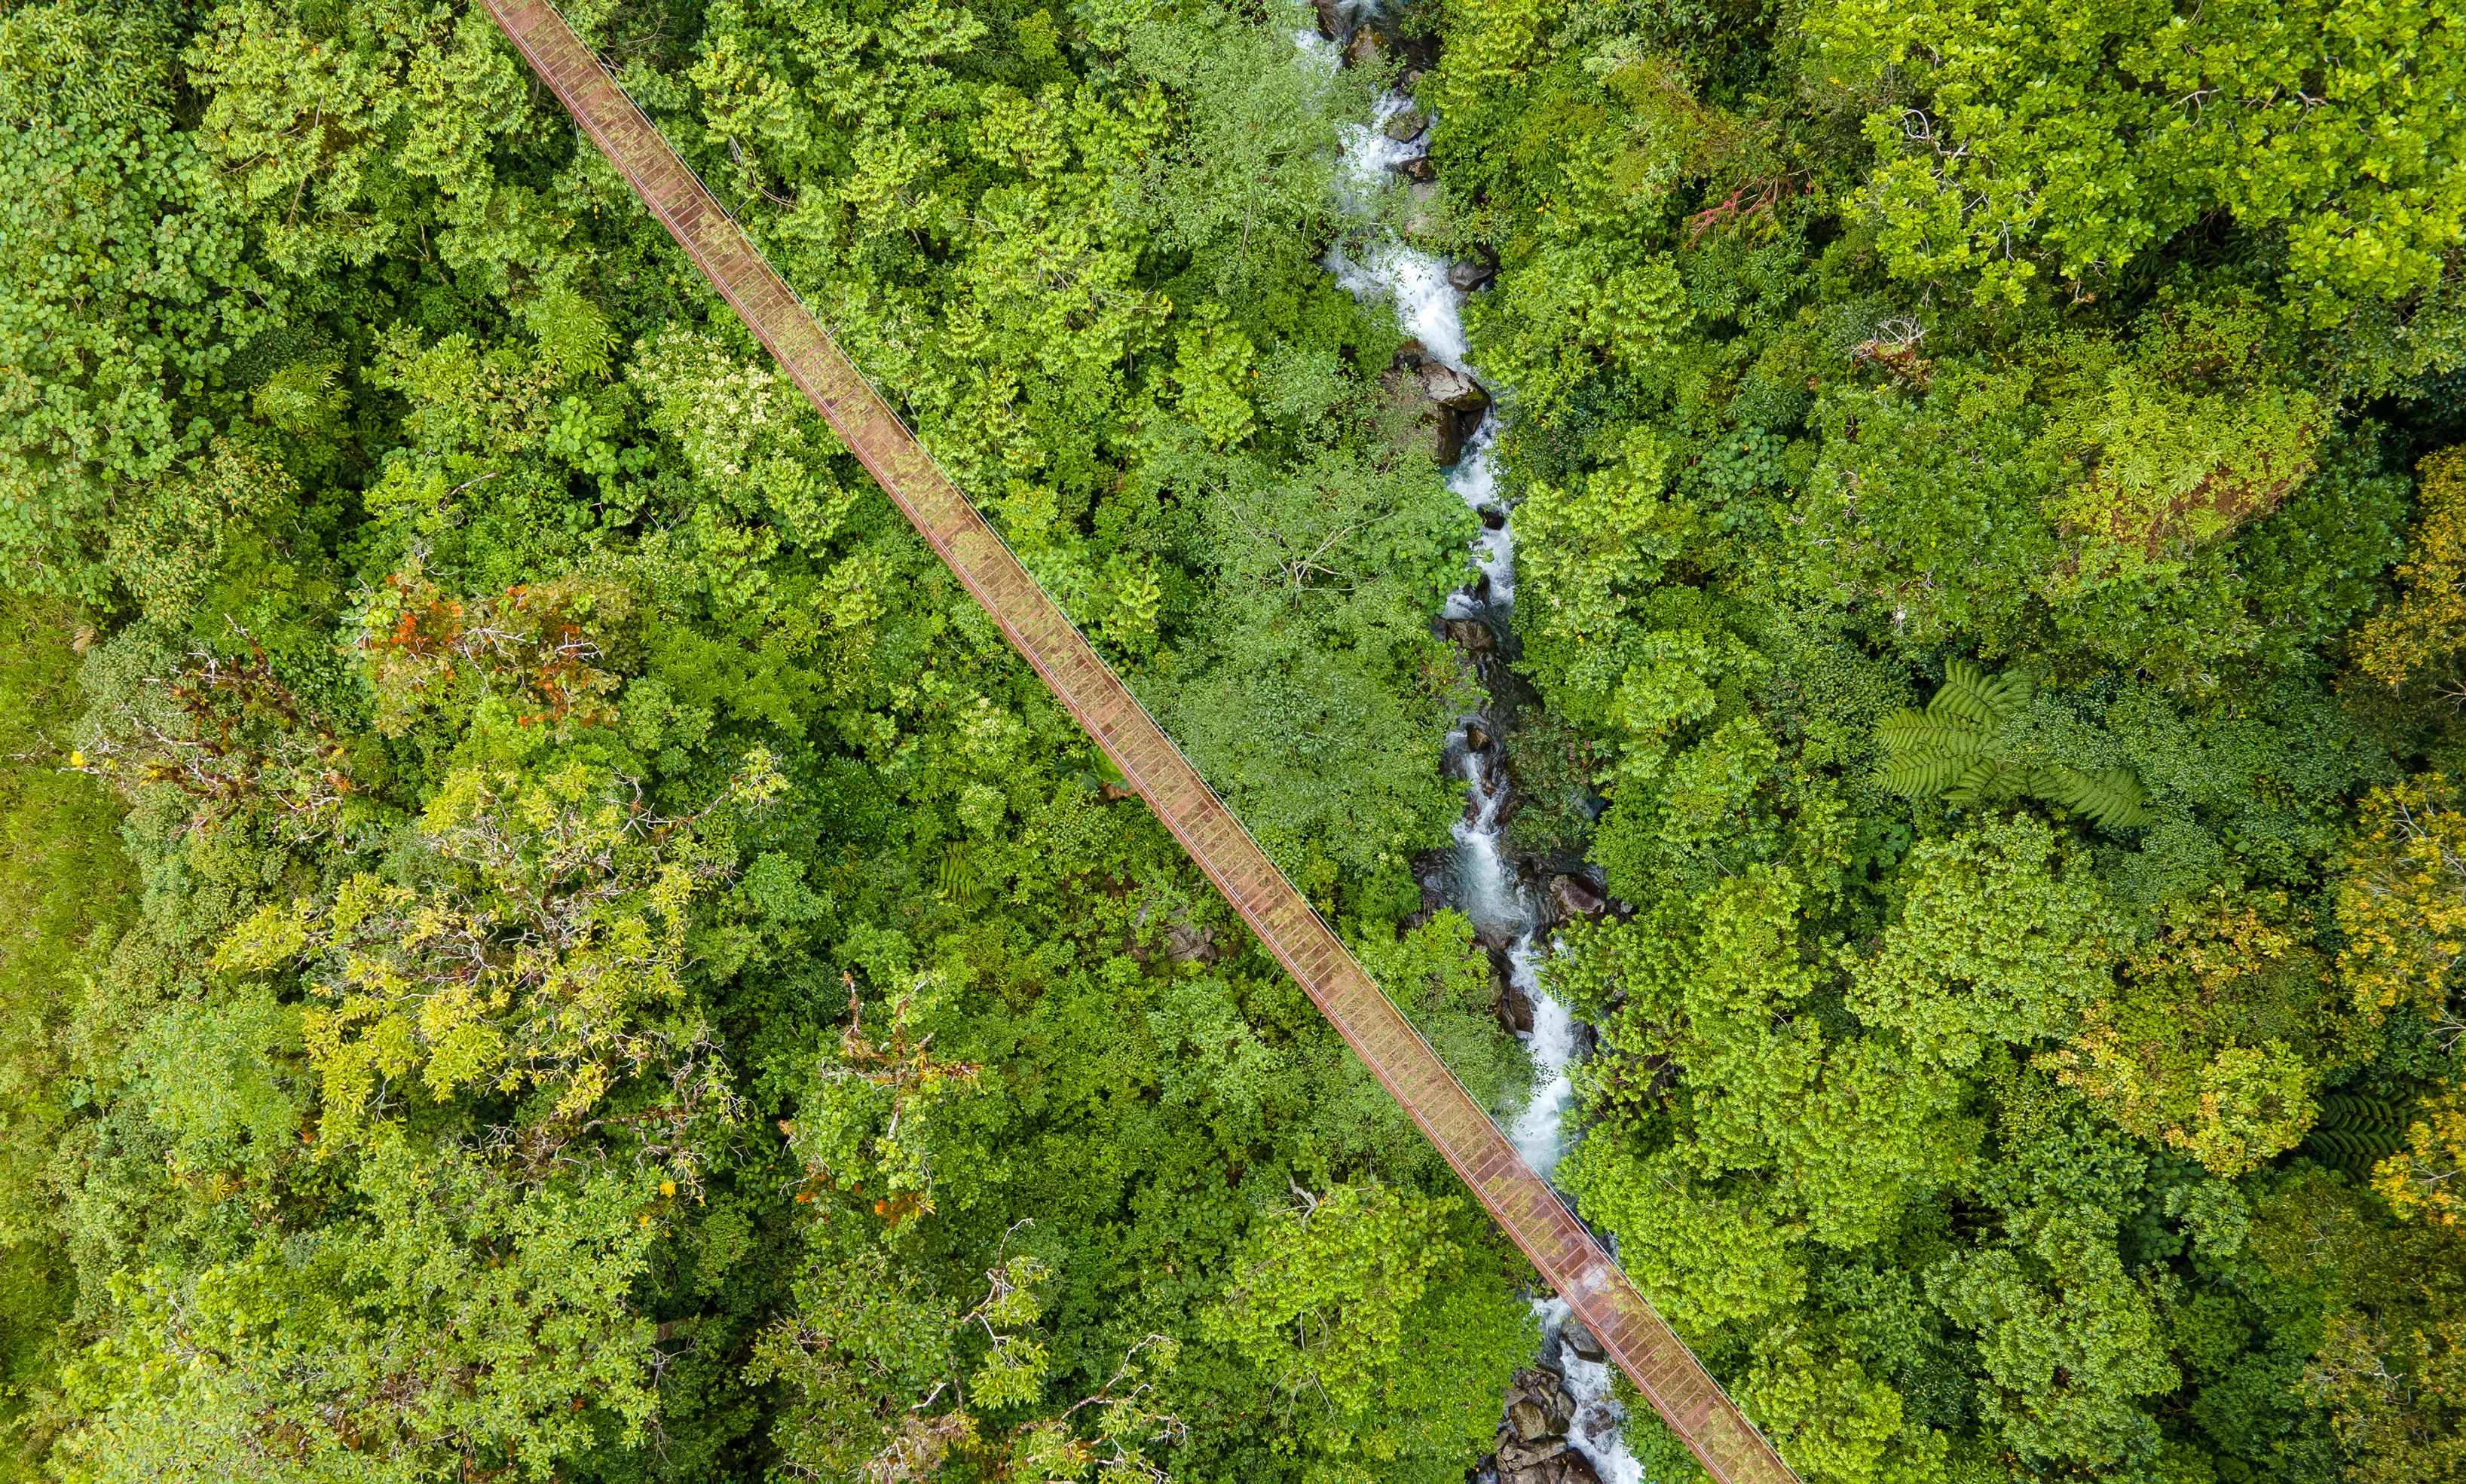 Hanging Bridges Over Rainforest